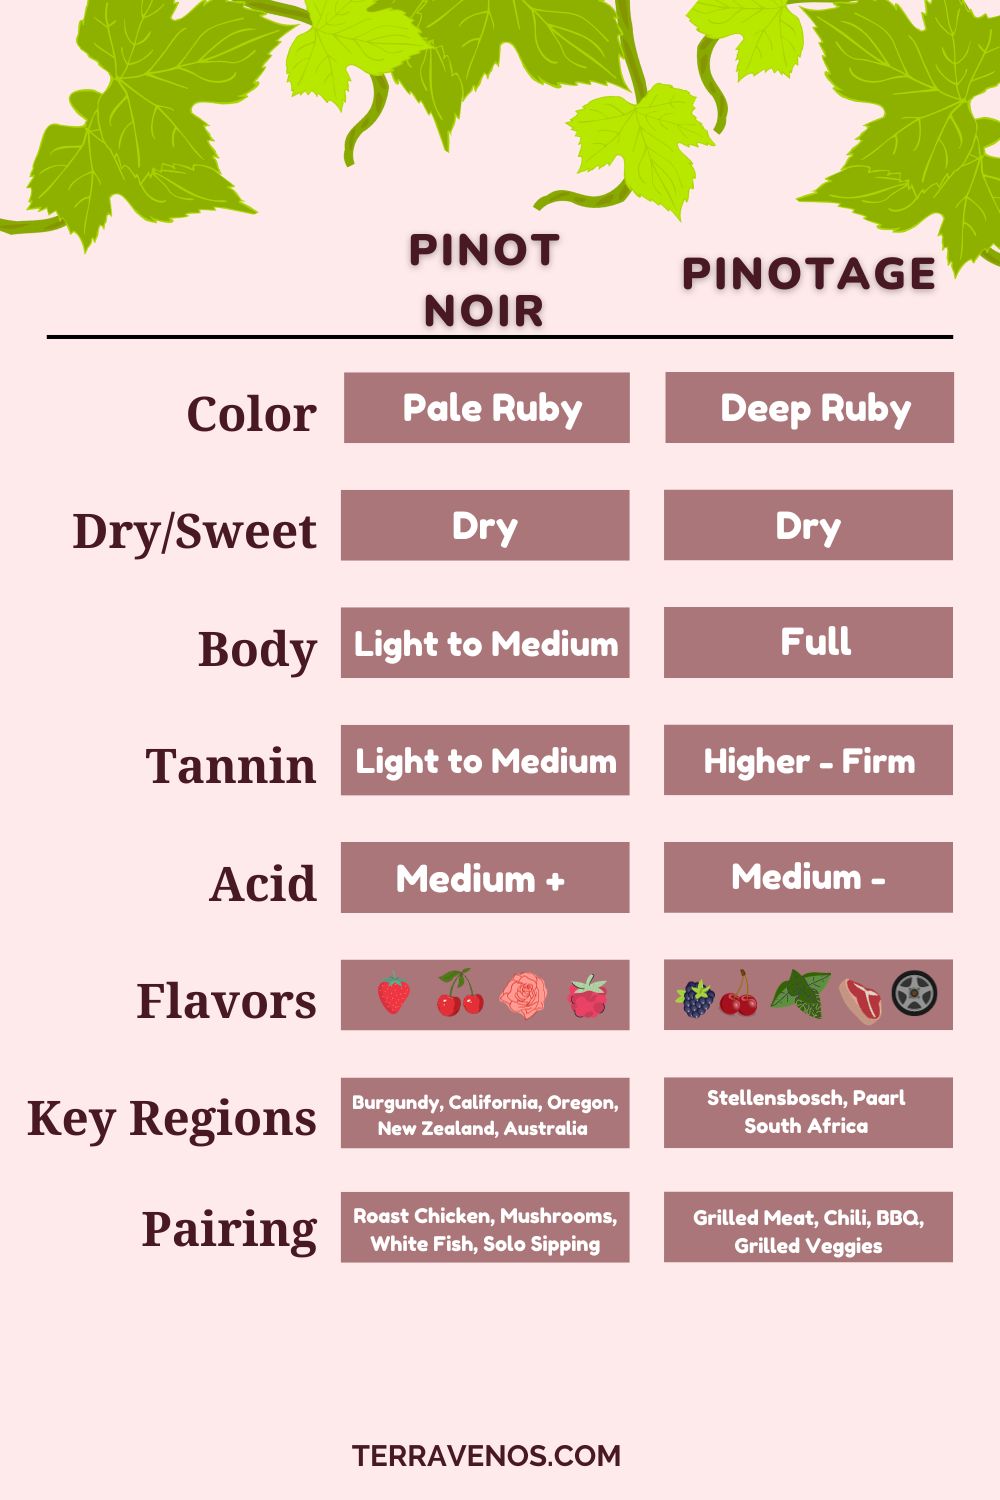 pinotage-vs-pinot-noir-infographic